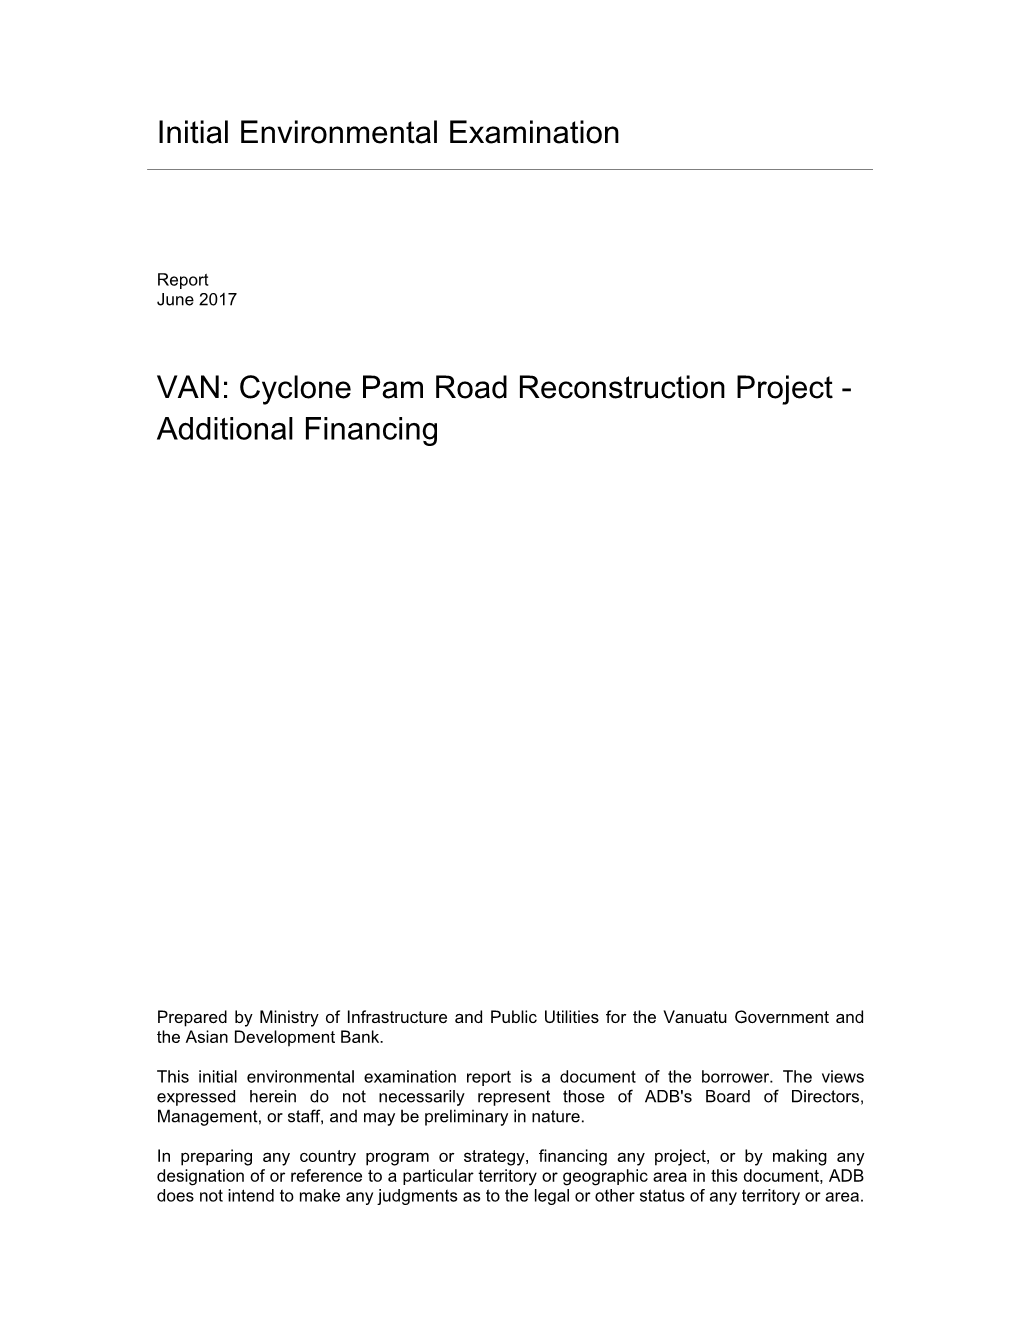 Initial Environmental Examination VAN: Cyclone Pam Road Reconstruction Project